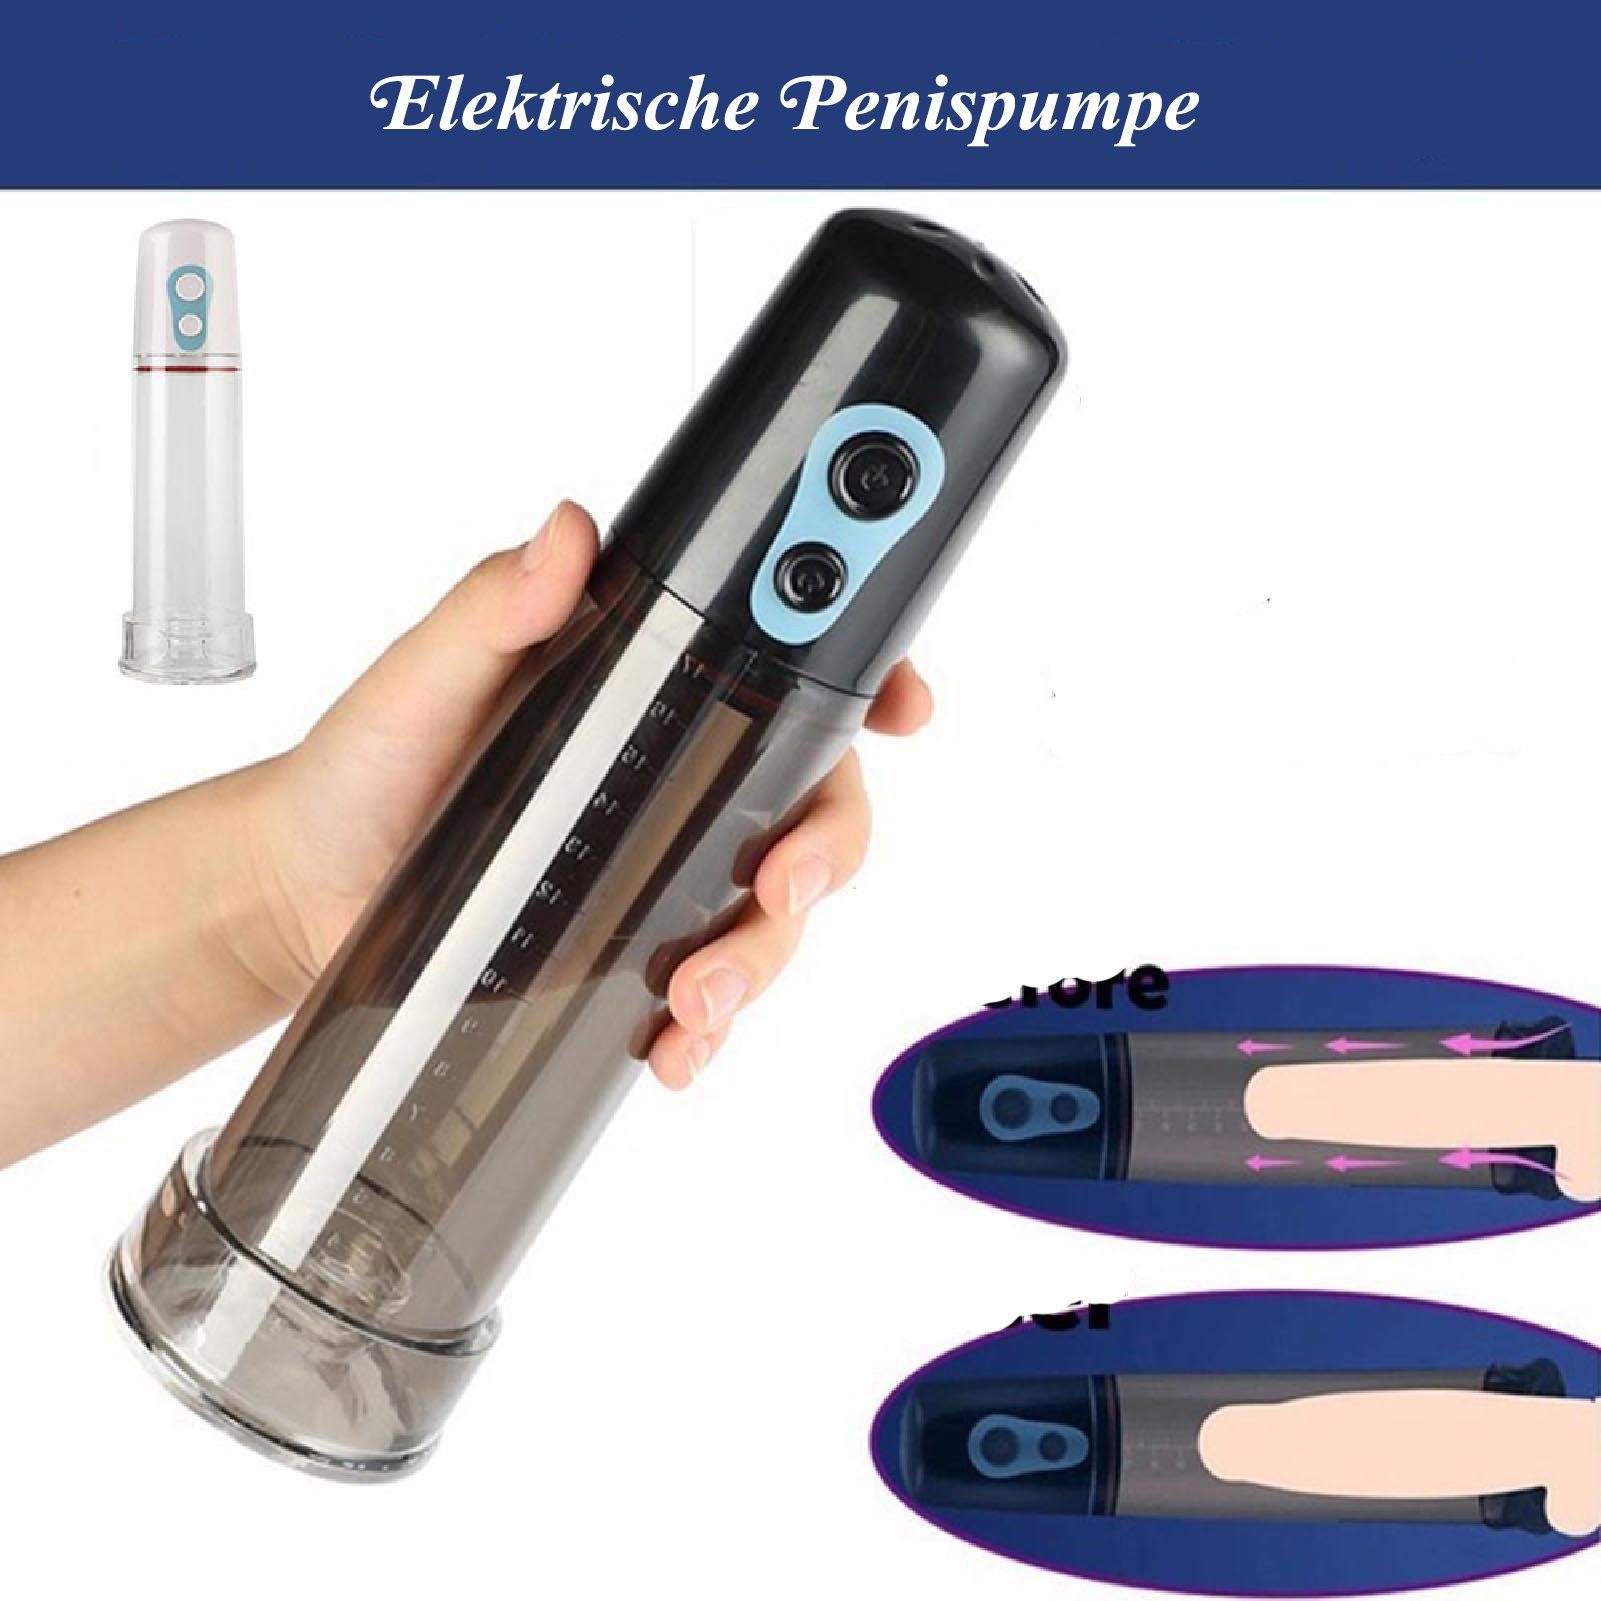 Rutaqian Penispumpe Penispumpe Elektrisch Erotik Toy für Männer Auto Penisvergrößerung Weiß